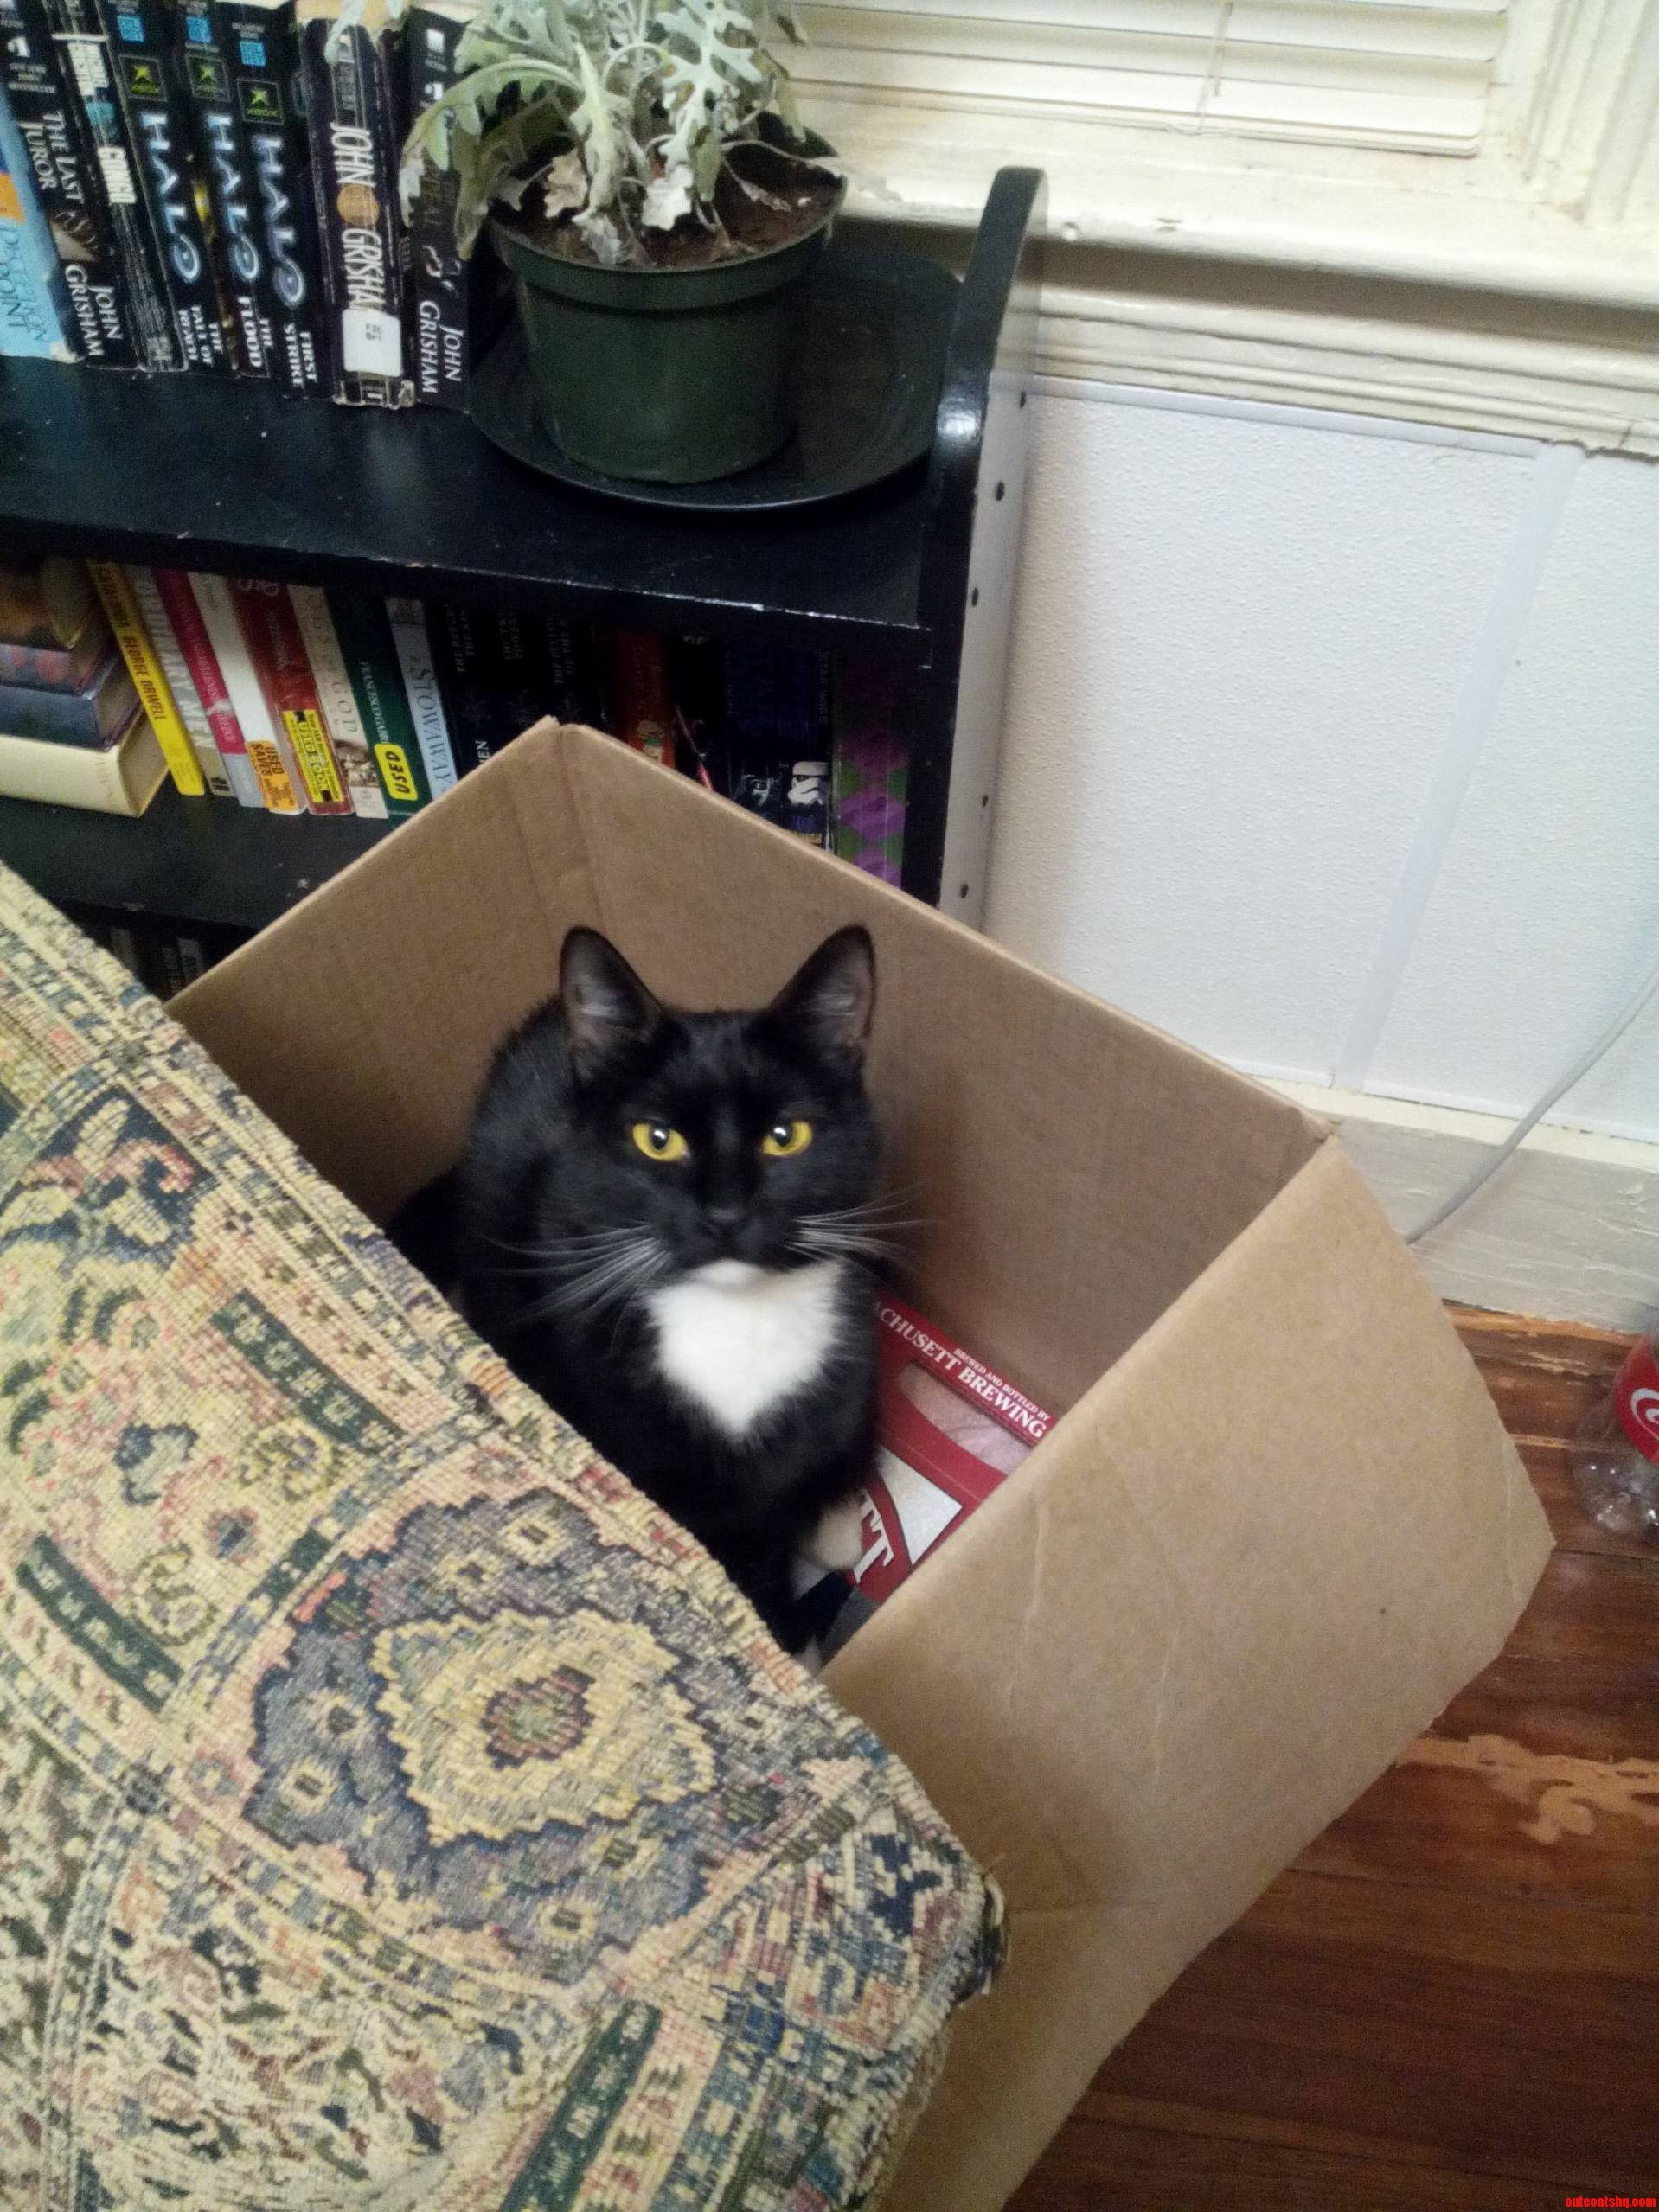 Margot also loves boxes